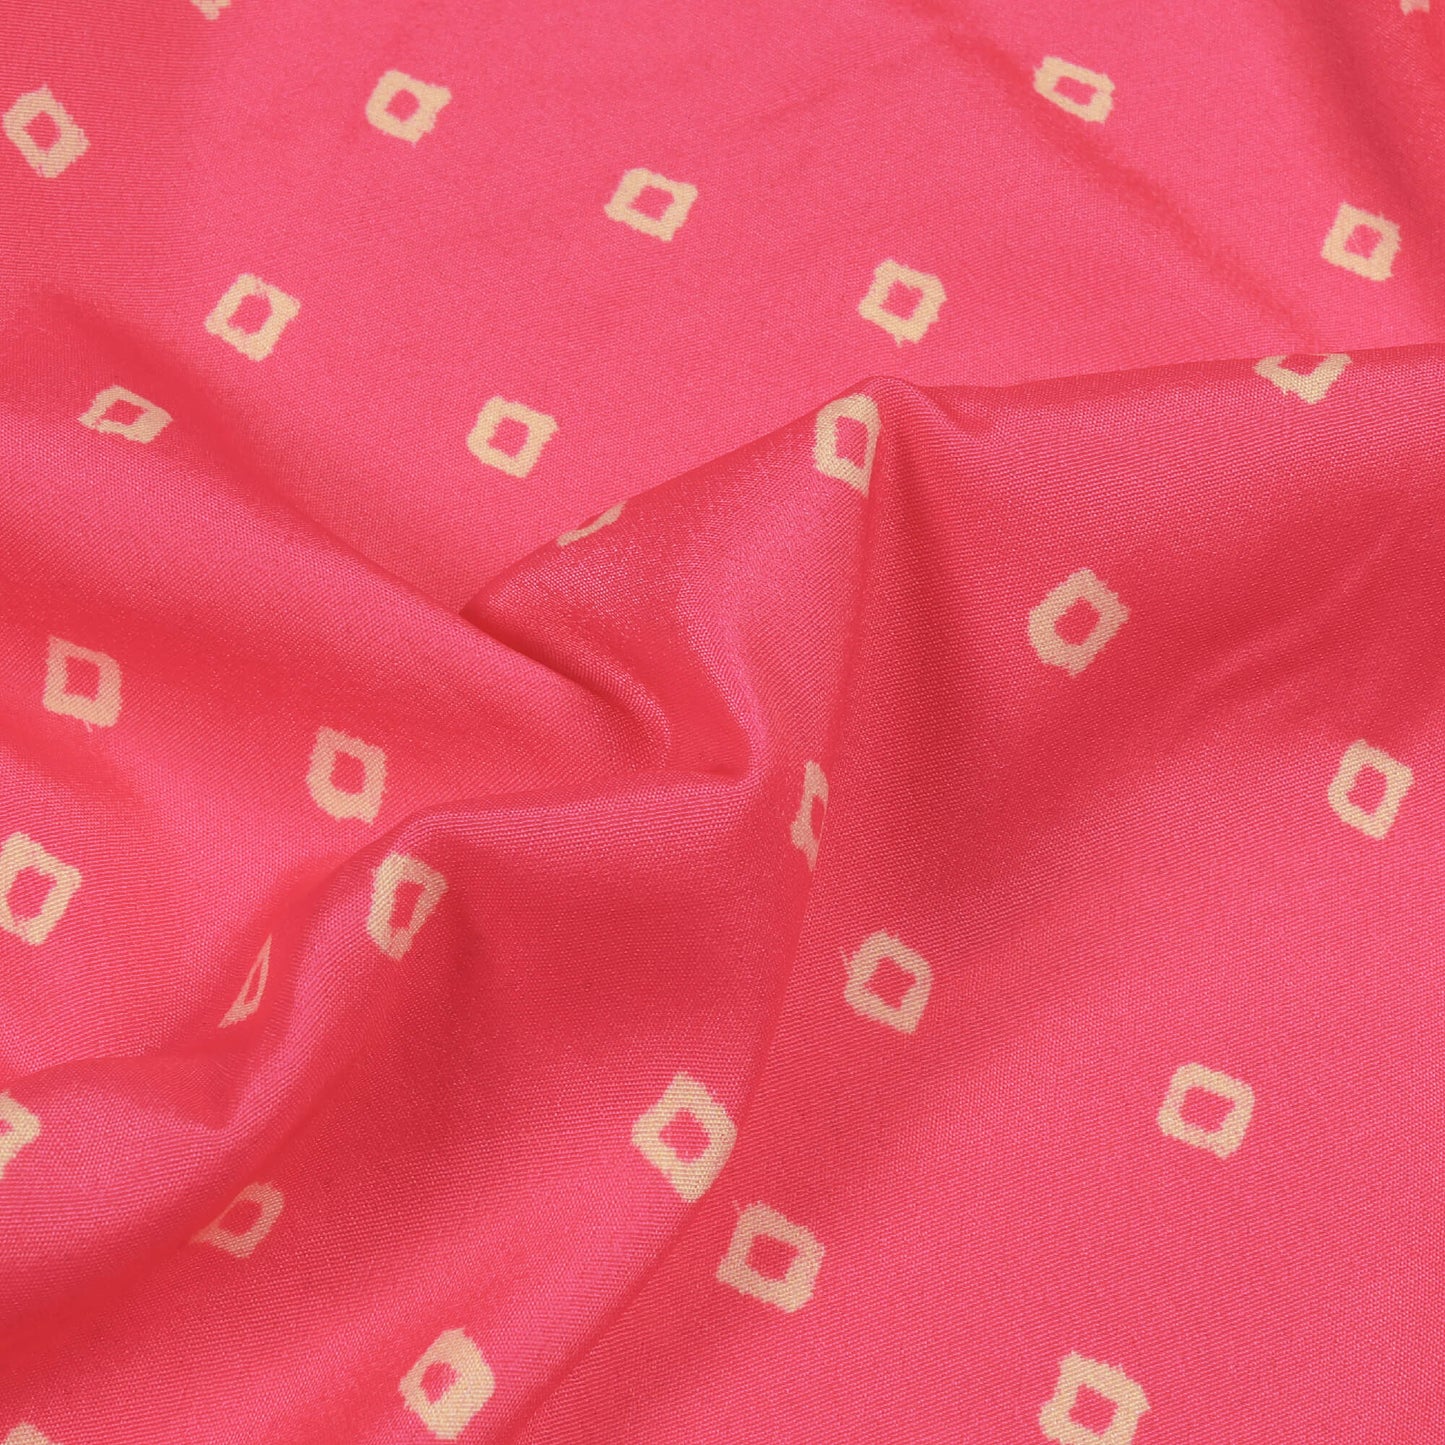 Hot Pink And Cream Bandhani Pattern Digital Print Crepe Satin Fabric